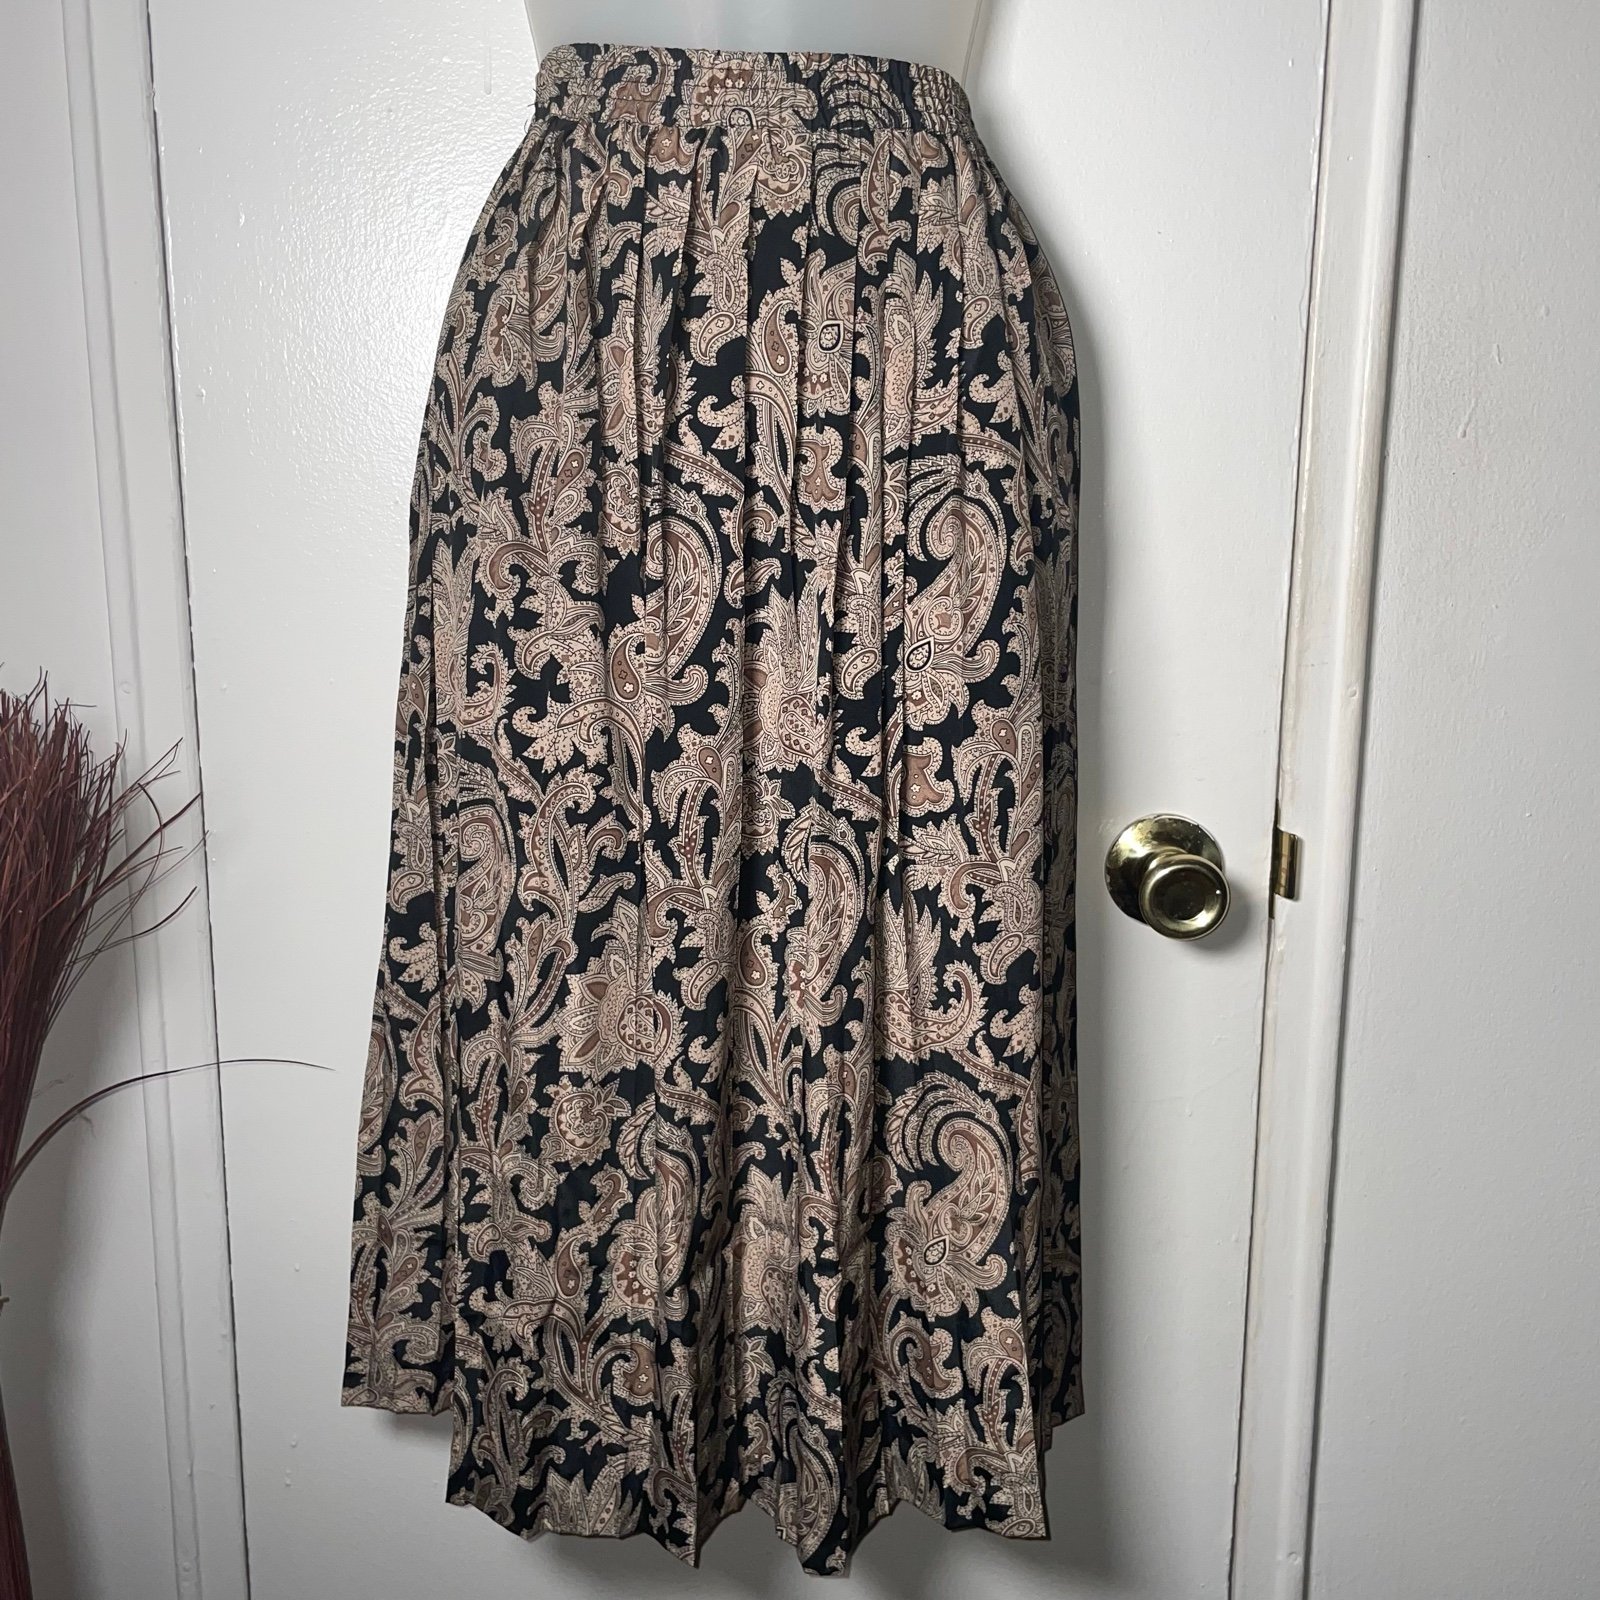 Gorgeous Vintage skirt JnefXQcxC Everyday Low Prices